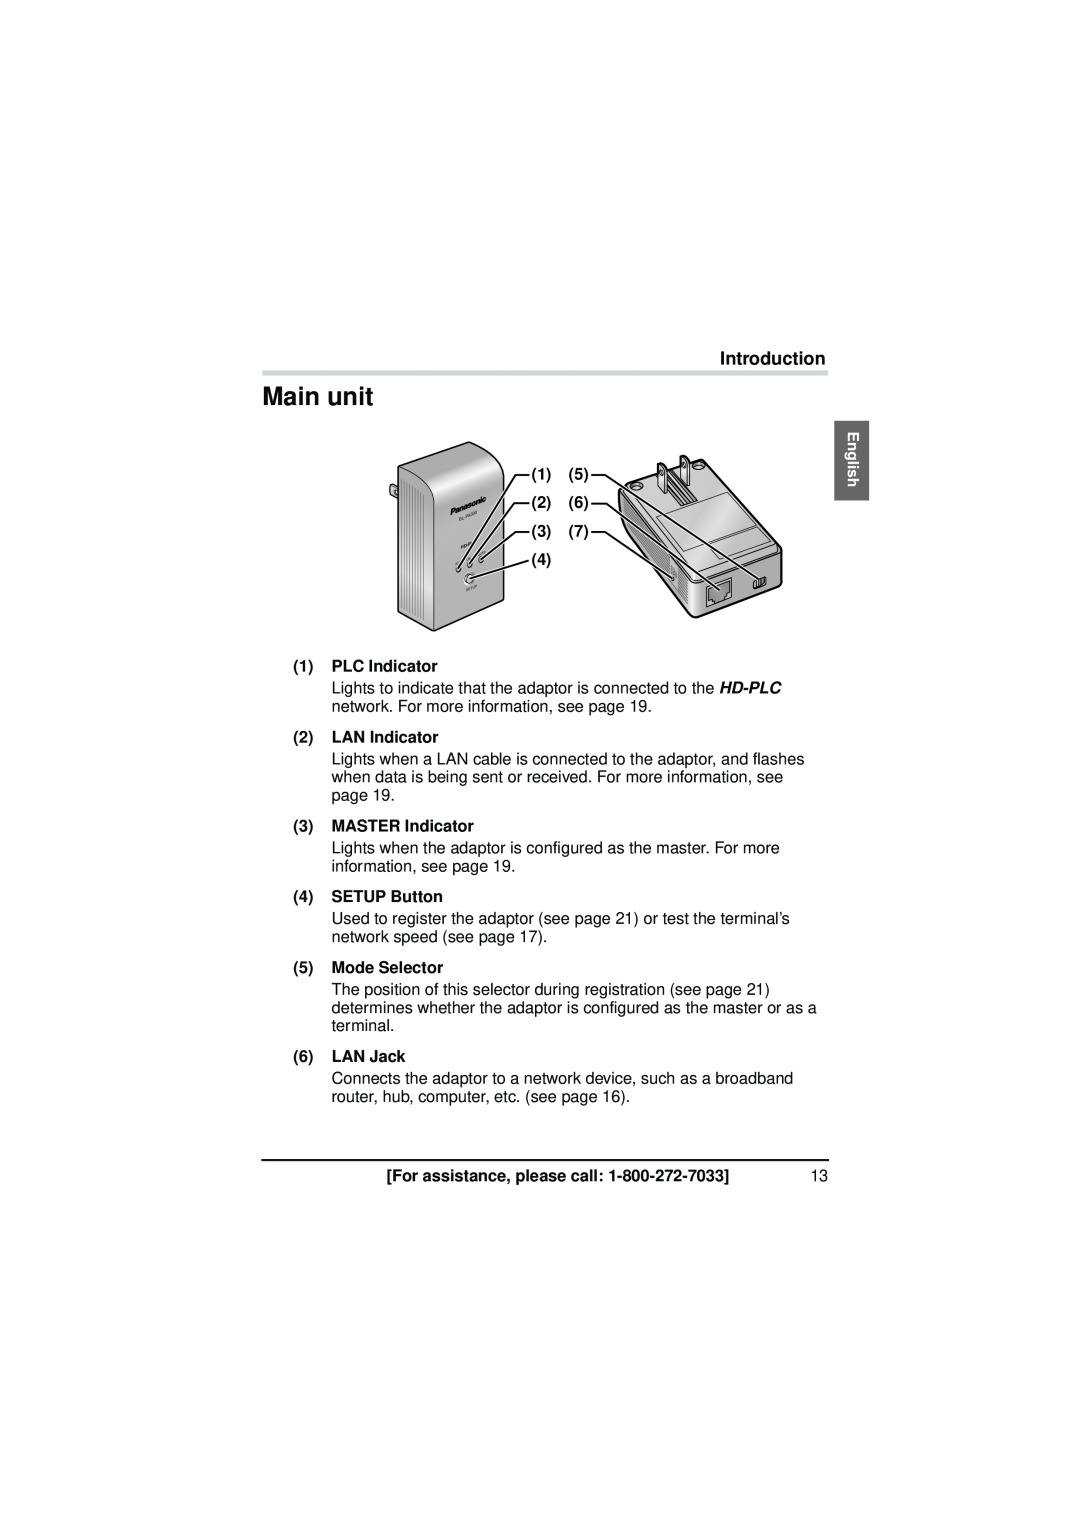 Panasonic BL-PA300KTA Main unit, PLC Indicator, LAN Indicator, MASTER Indicator, SETUP Button, Mode Selector, LAN Jack 